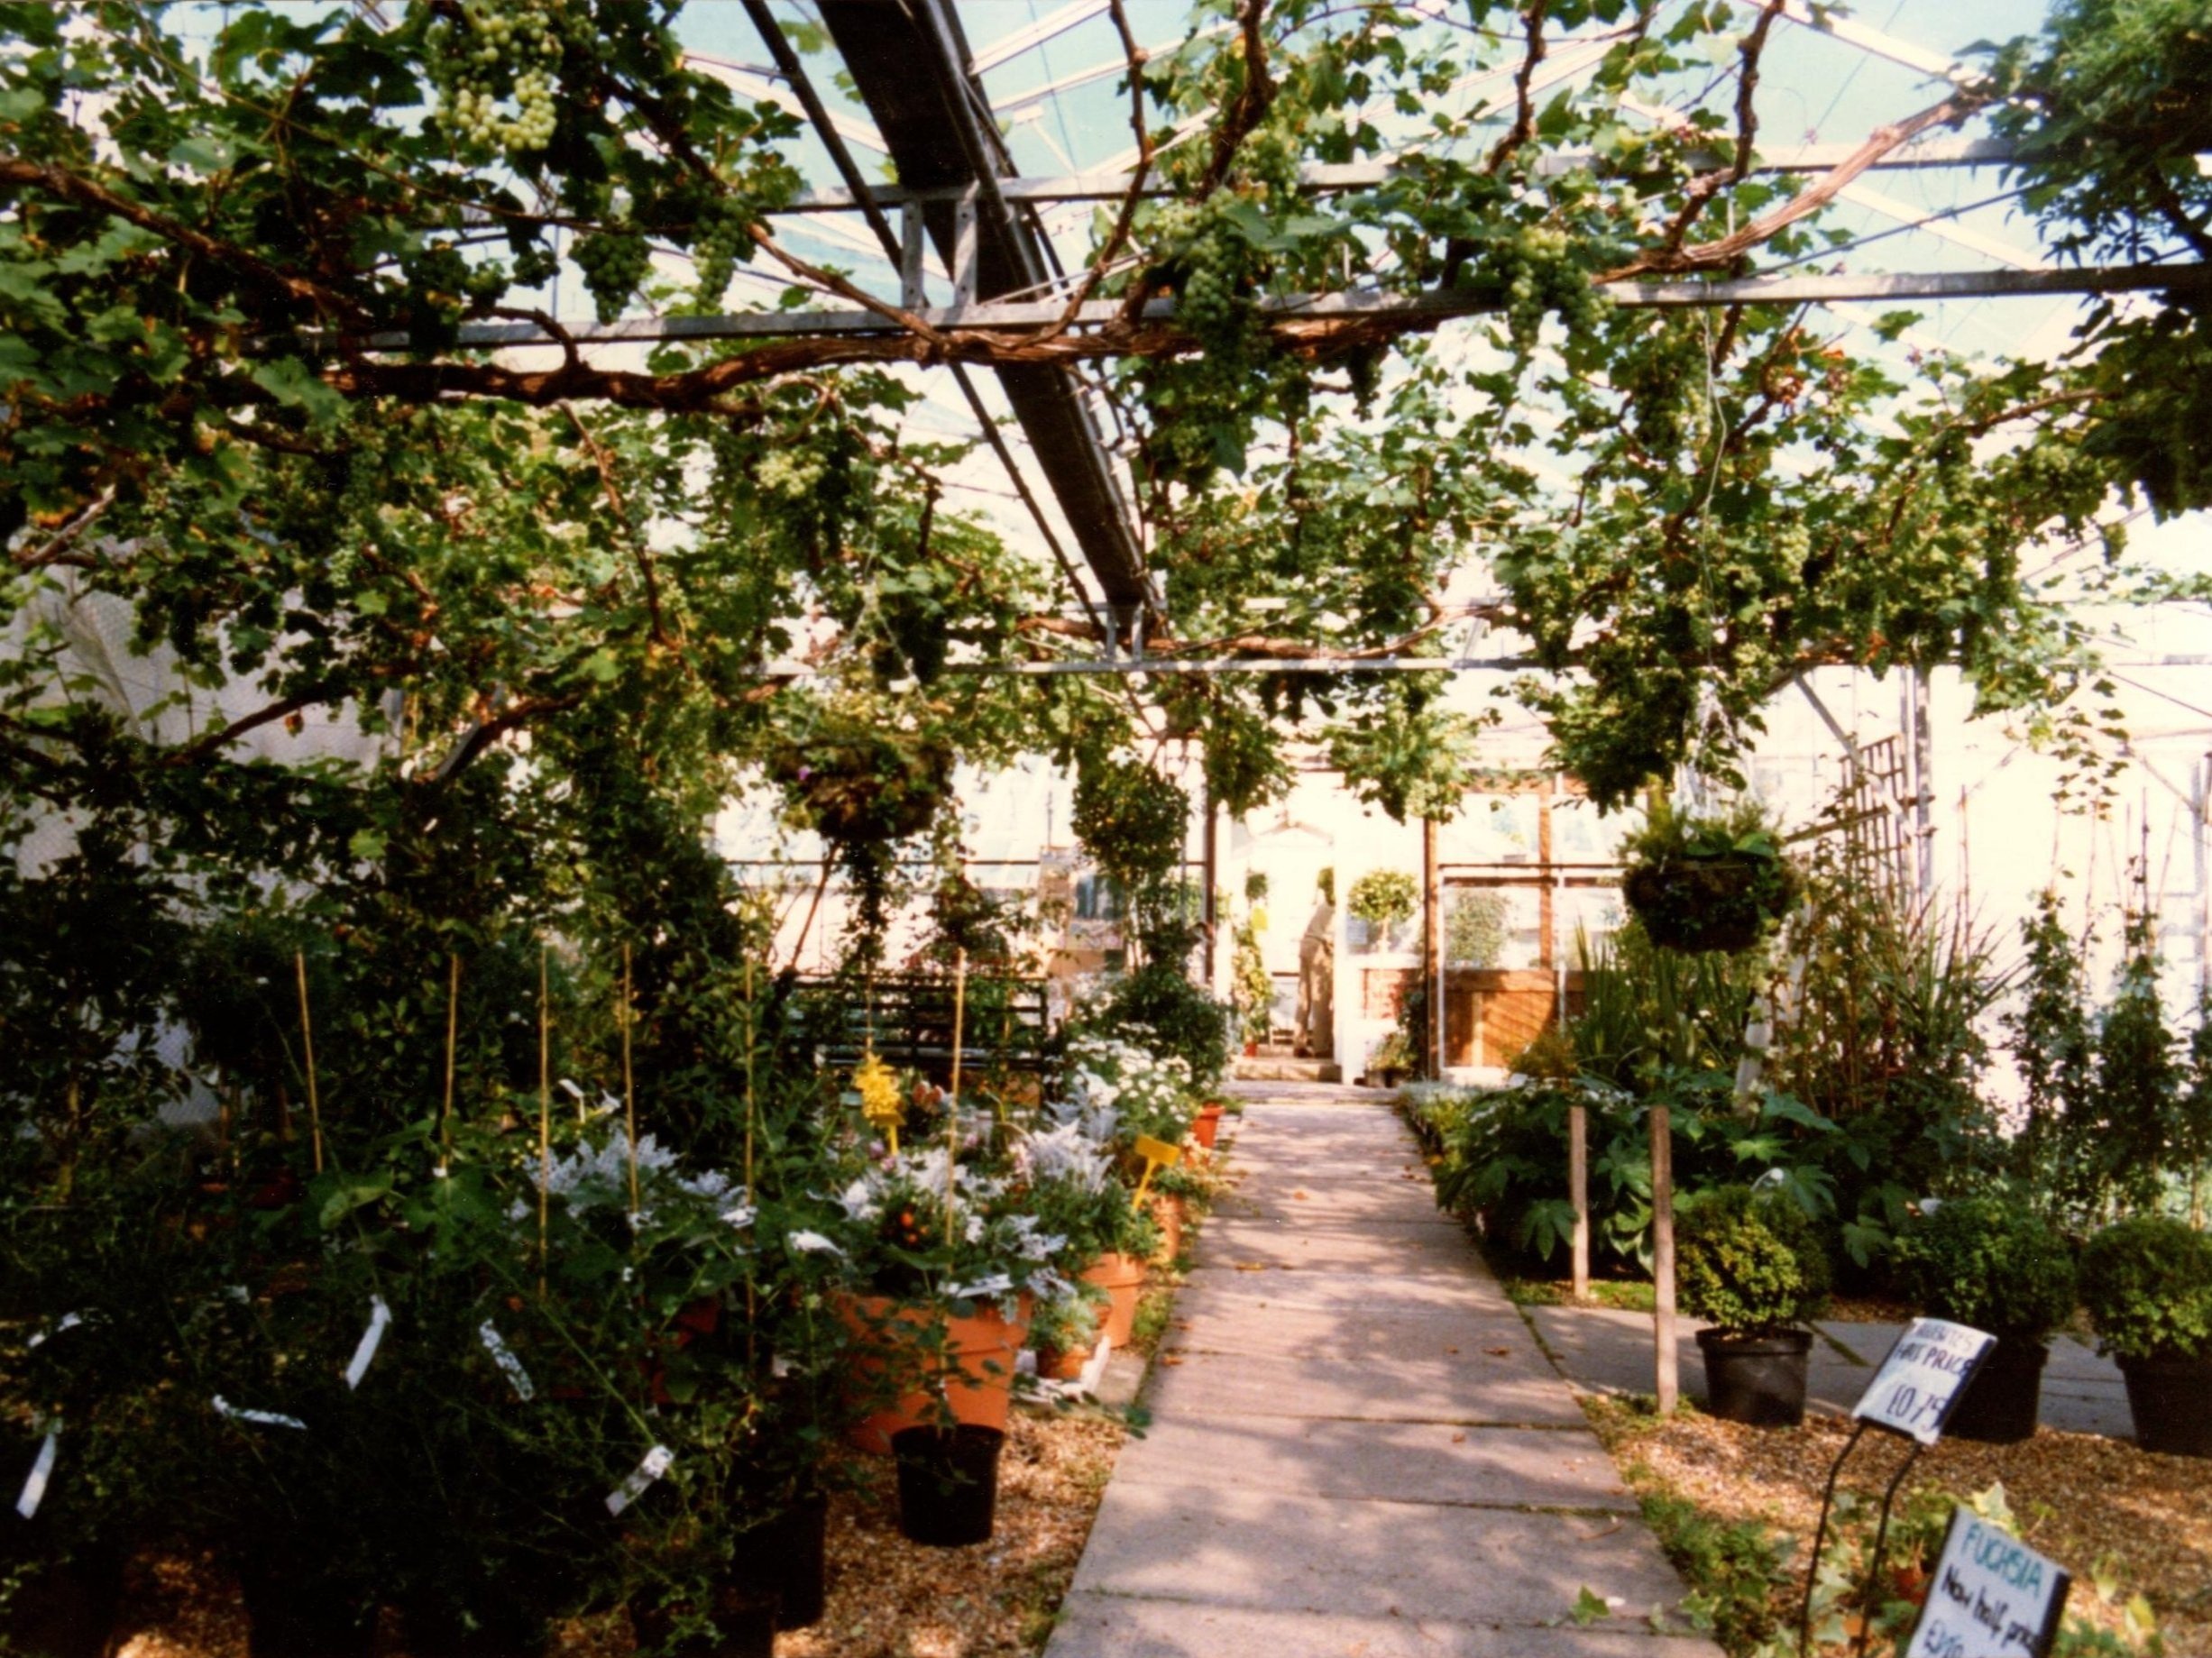 Inside the main greenhouse